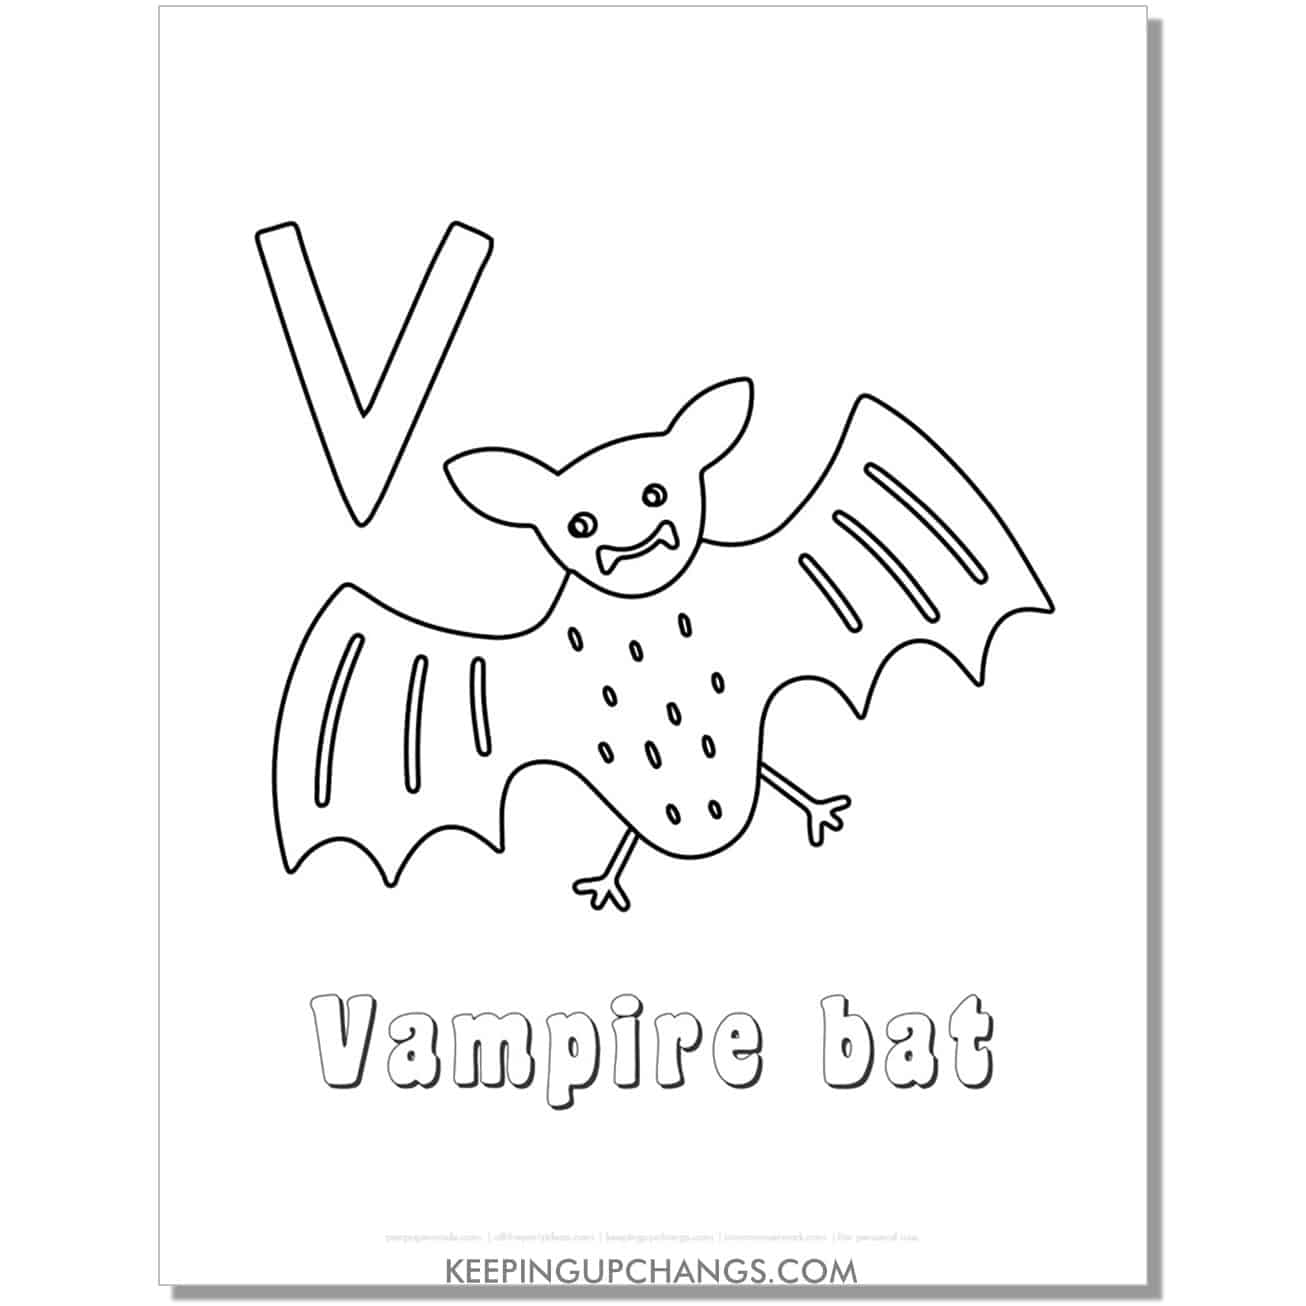 fun abc v coloring page with vampire bat hand drawing.